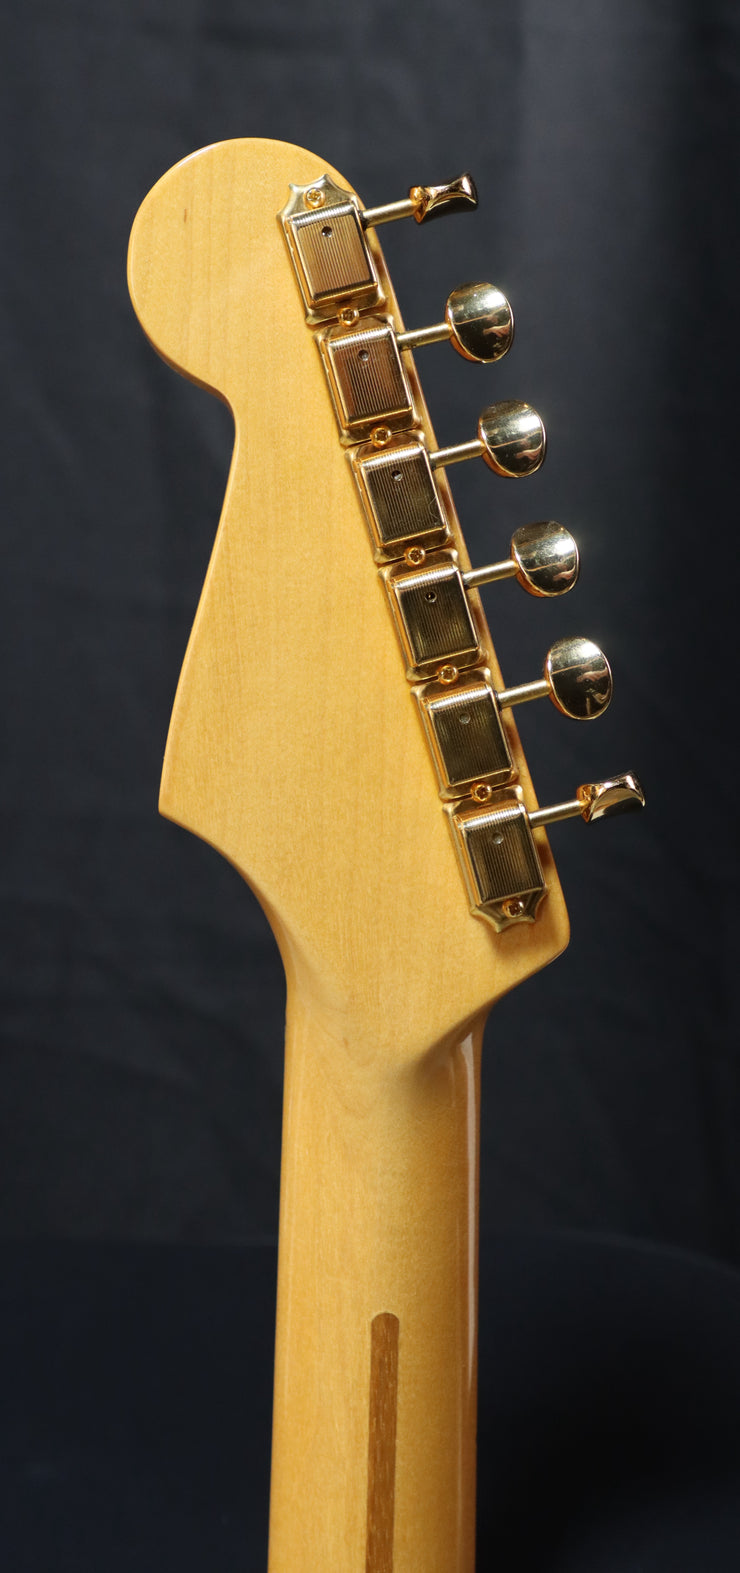 Fender Mary Kaye Stratocaster